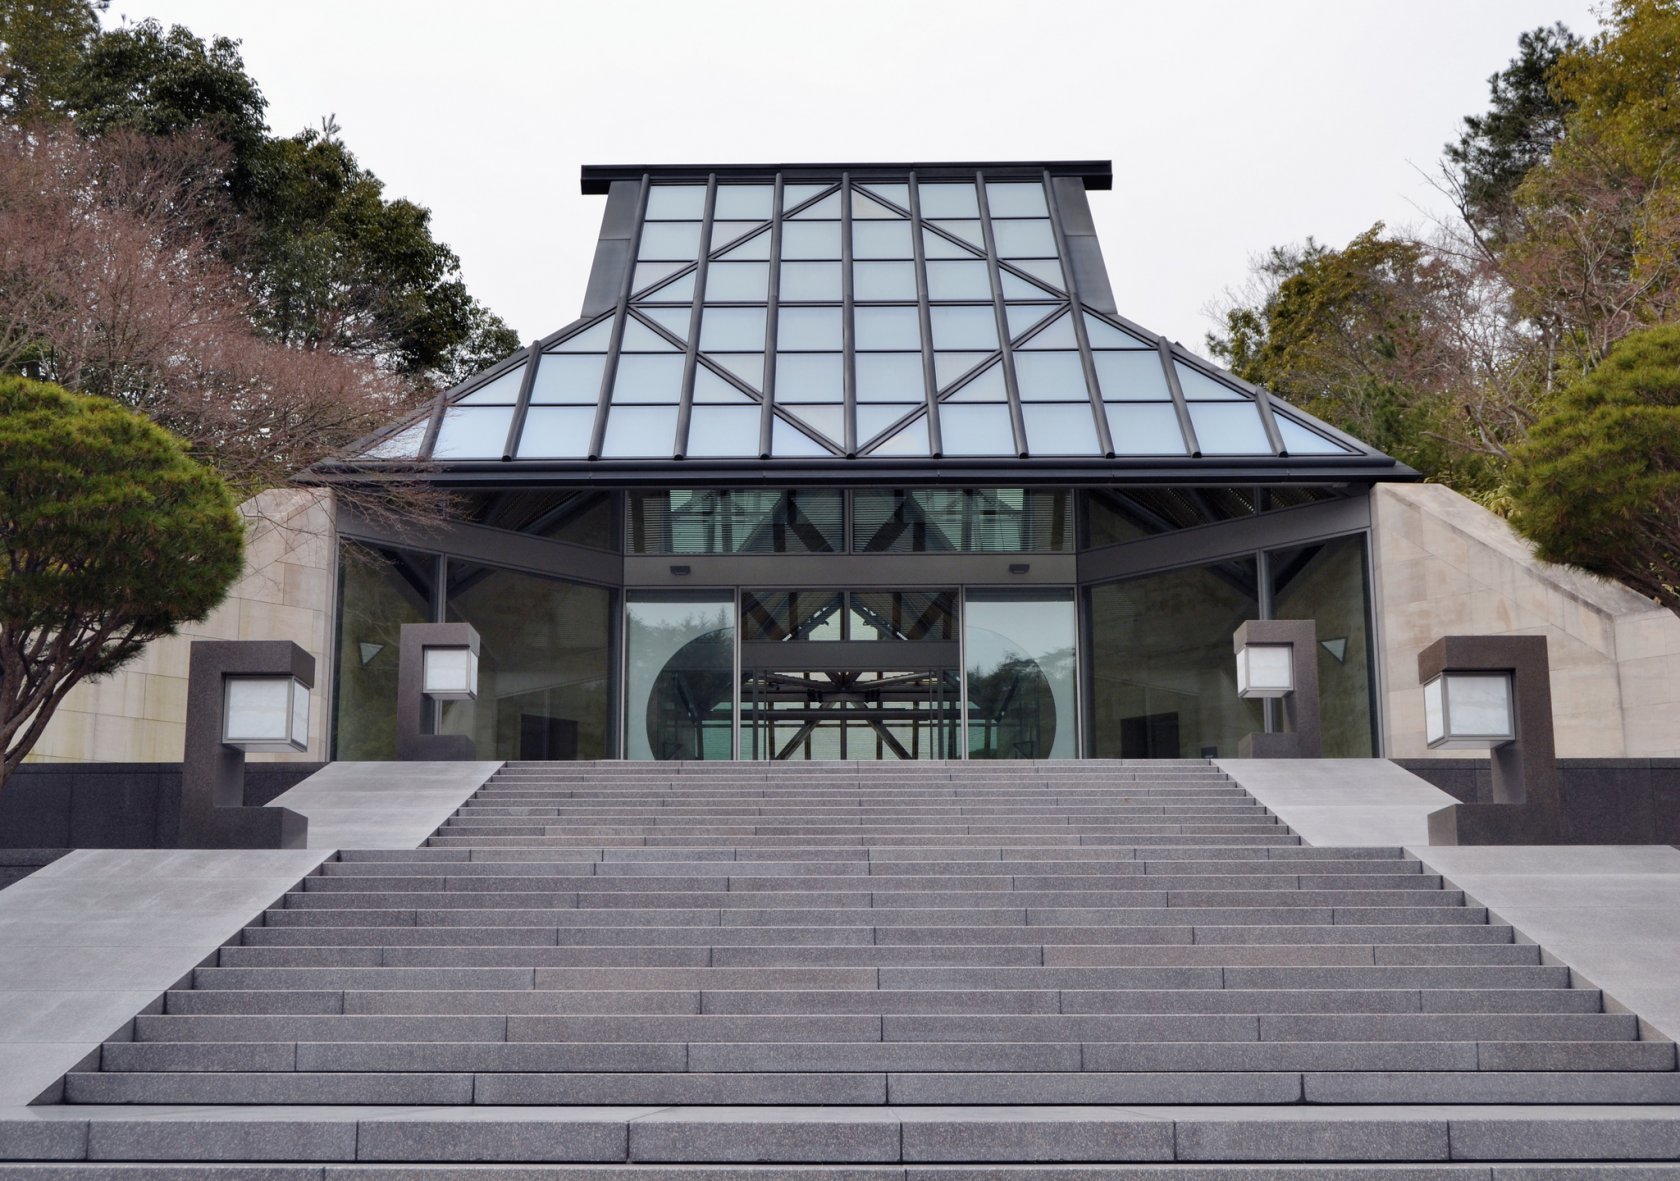 MIHO MUSEUM: I. M. Pei's Architectural Masterpiece - Japan Web Magazine